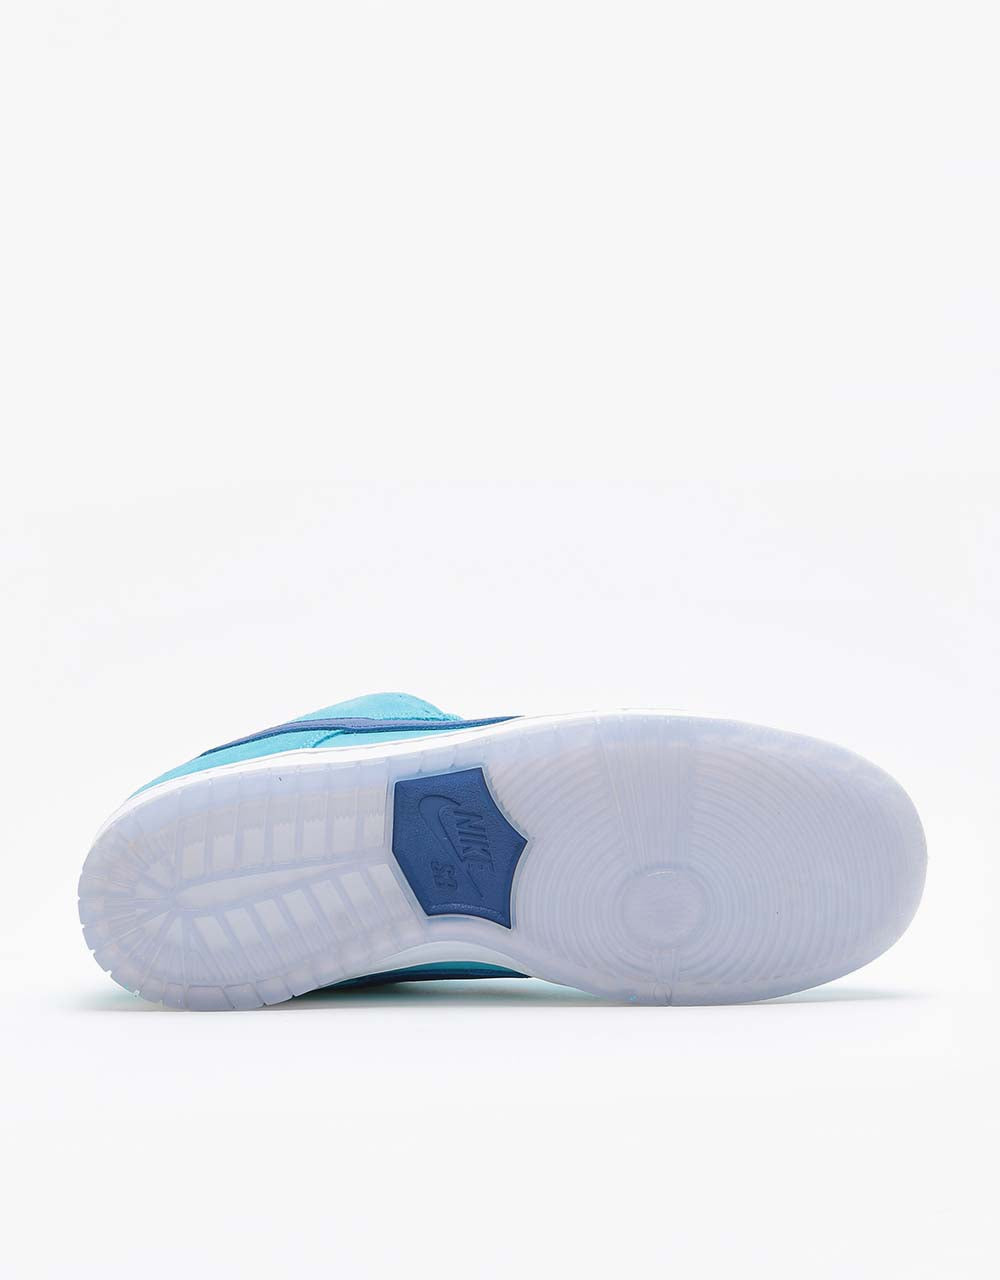 Nike SB Dunk Low Pro Skate Shoes - Blue Fury